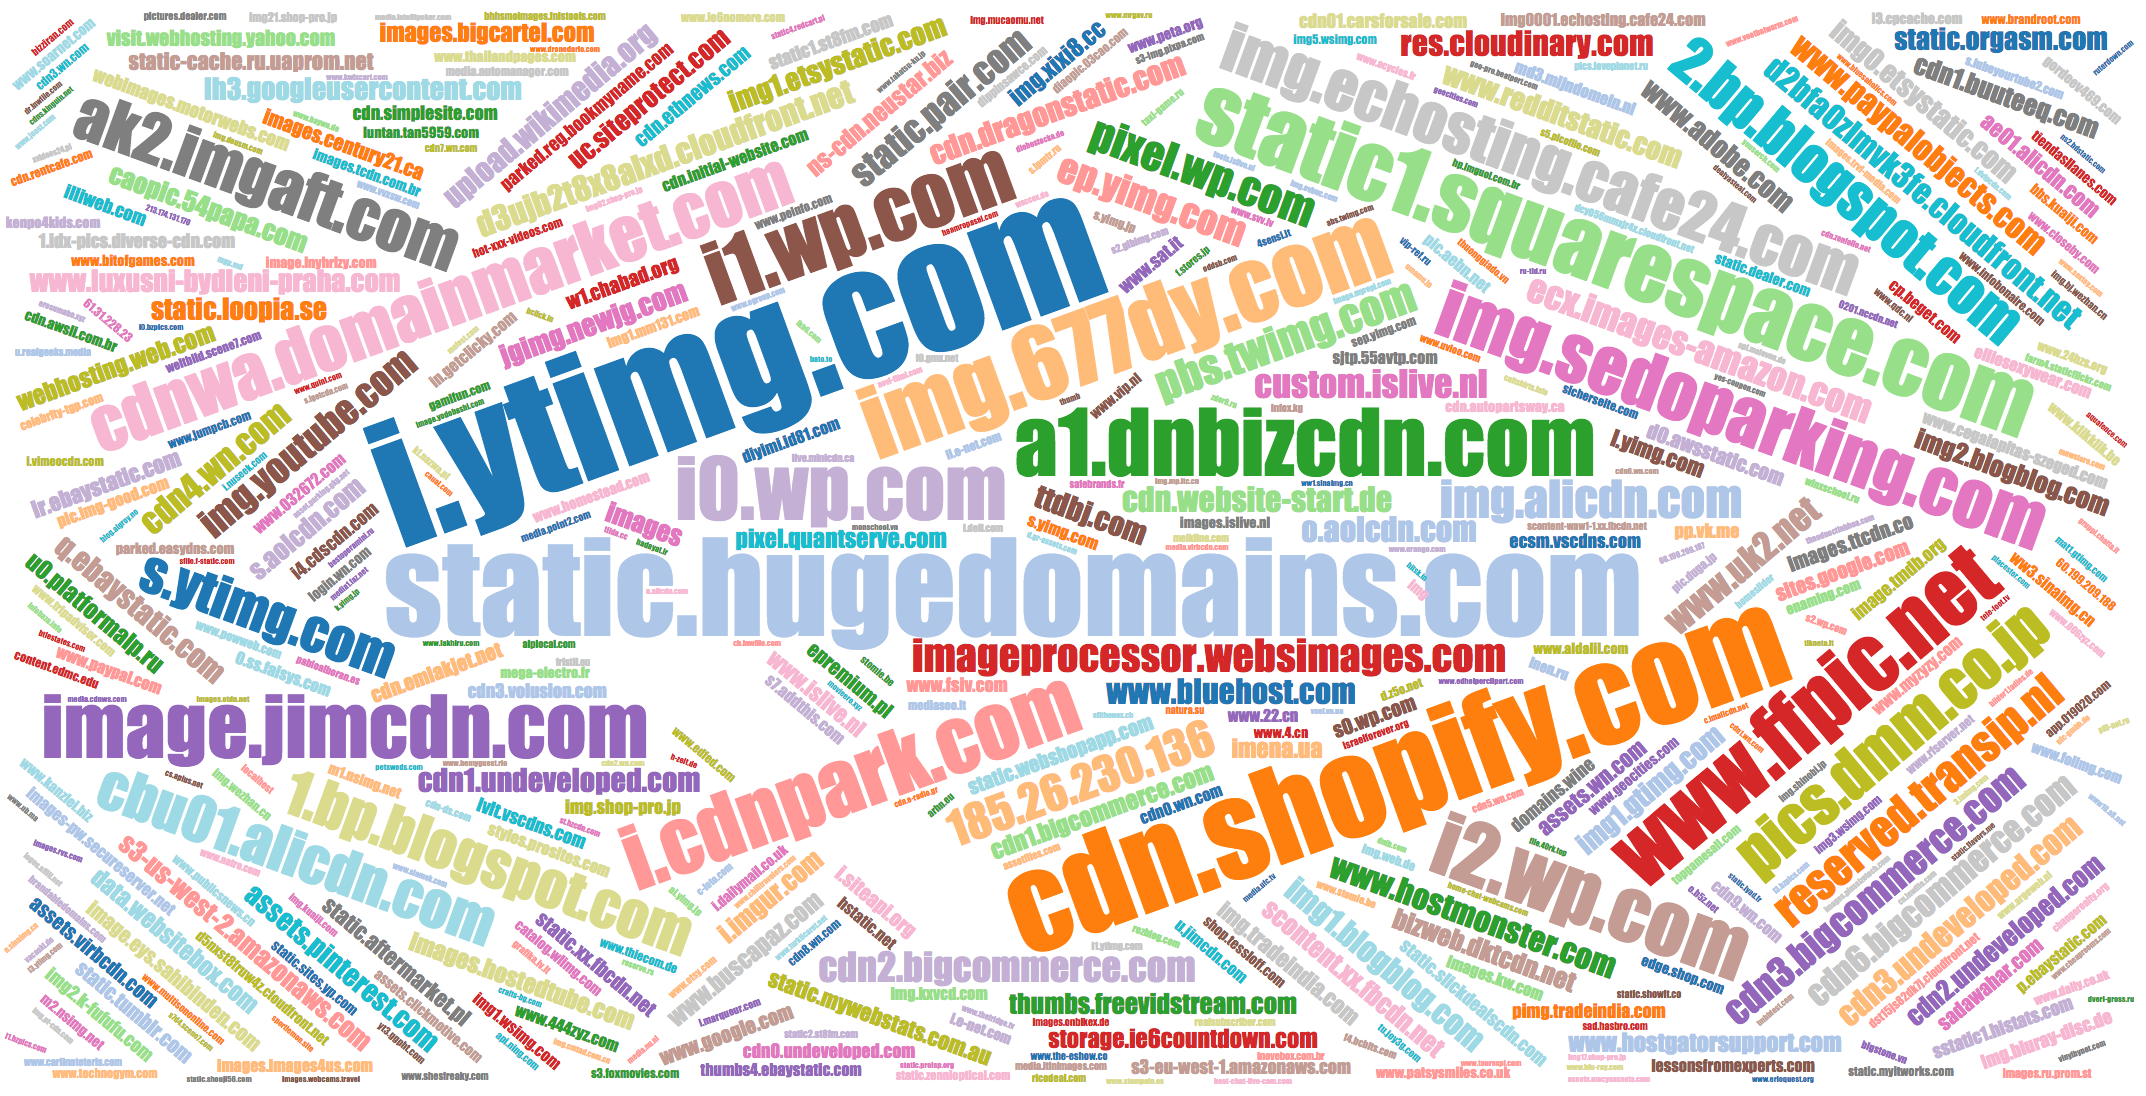 Popular names of IMG domains gigaplus.makeshop.jp, geocities.com, etc.